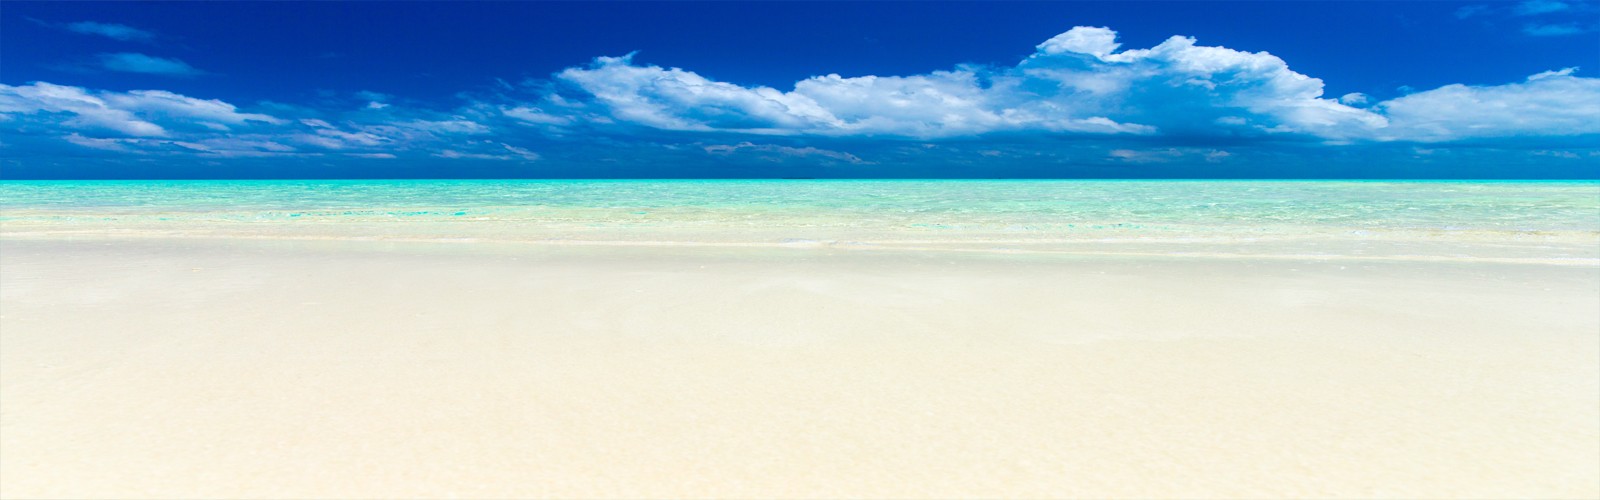 whitest beaches - blog - header